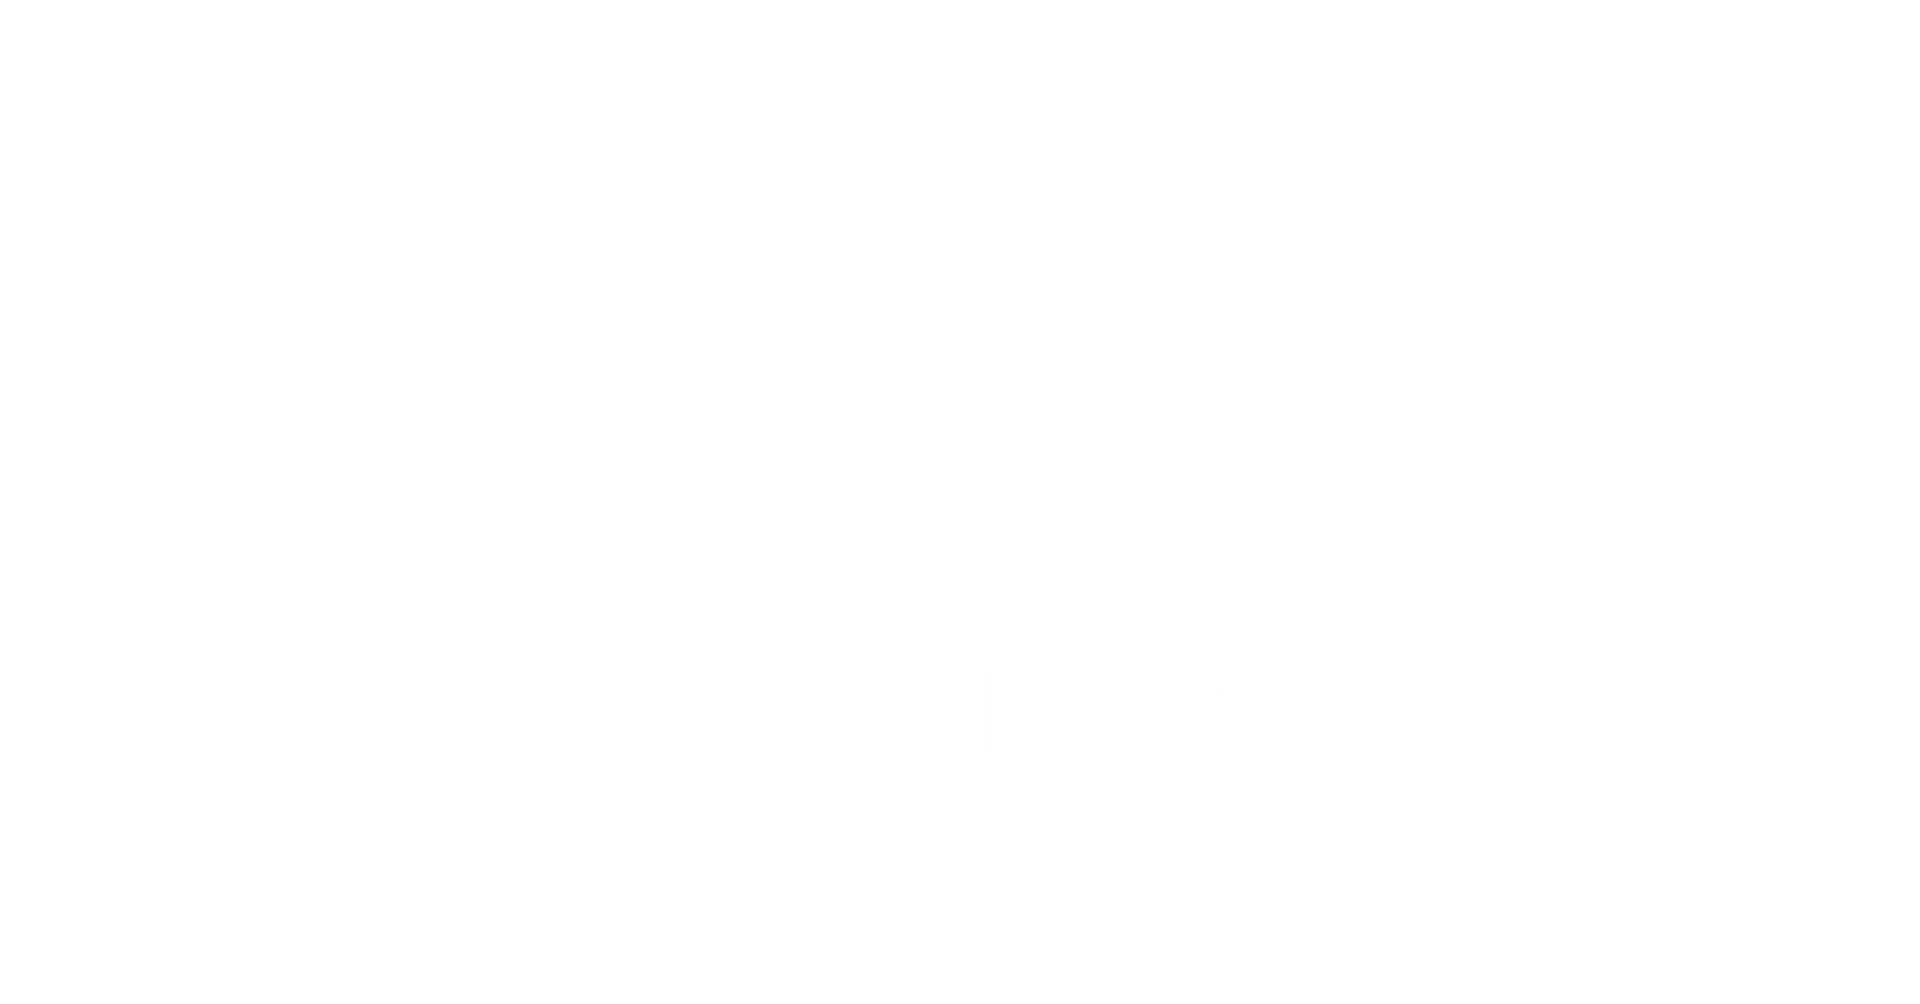 De Natuurman logo